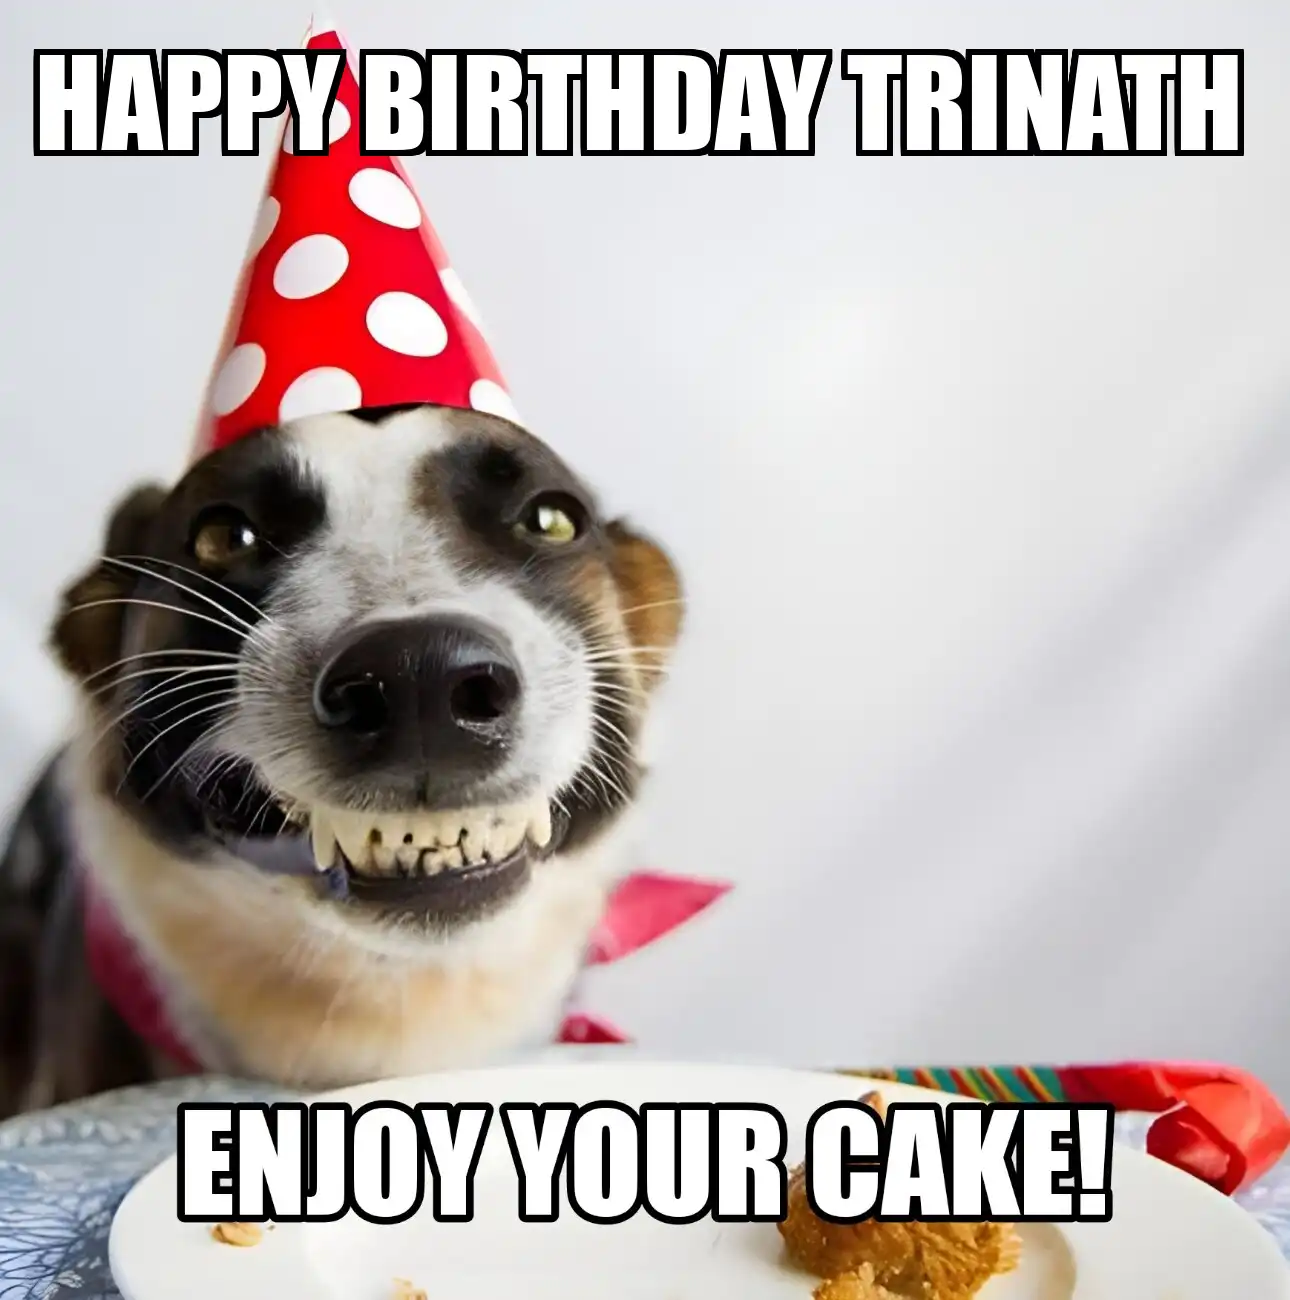 Happy Birthday Trinath Enjoy Your Cake Dog Meme